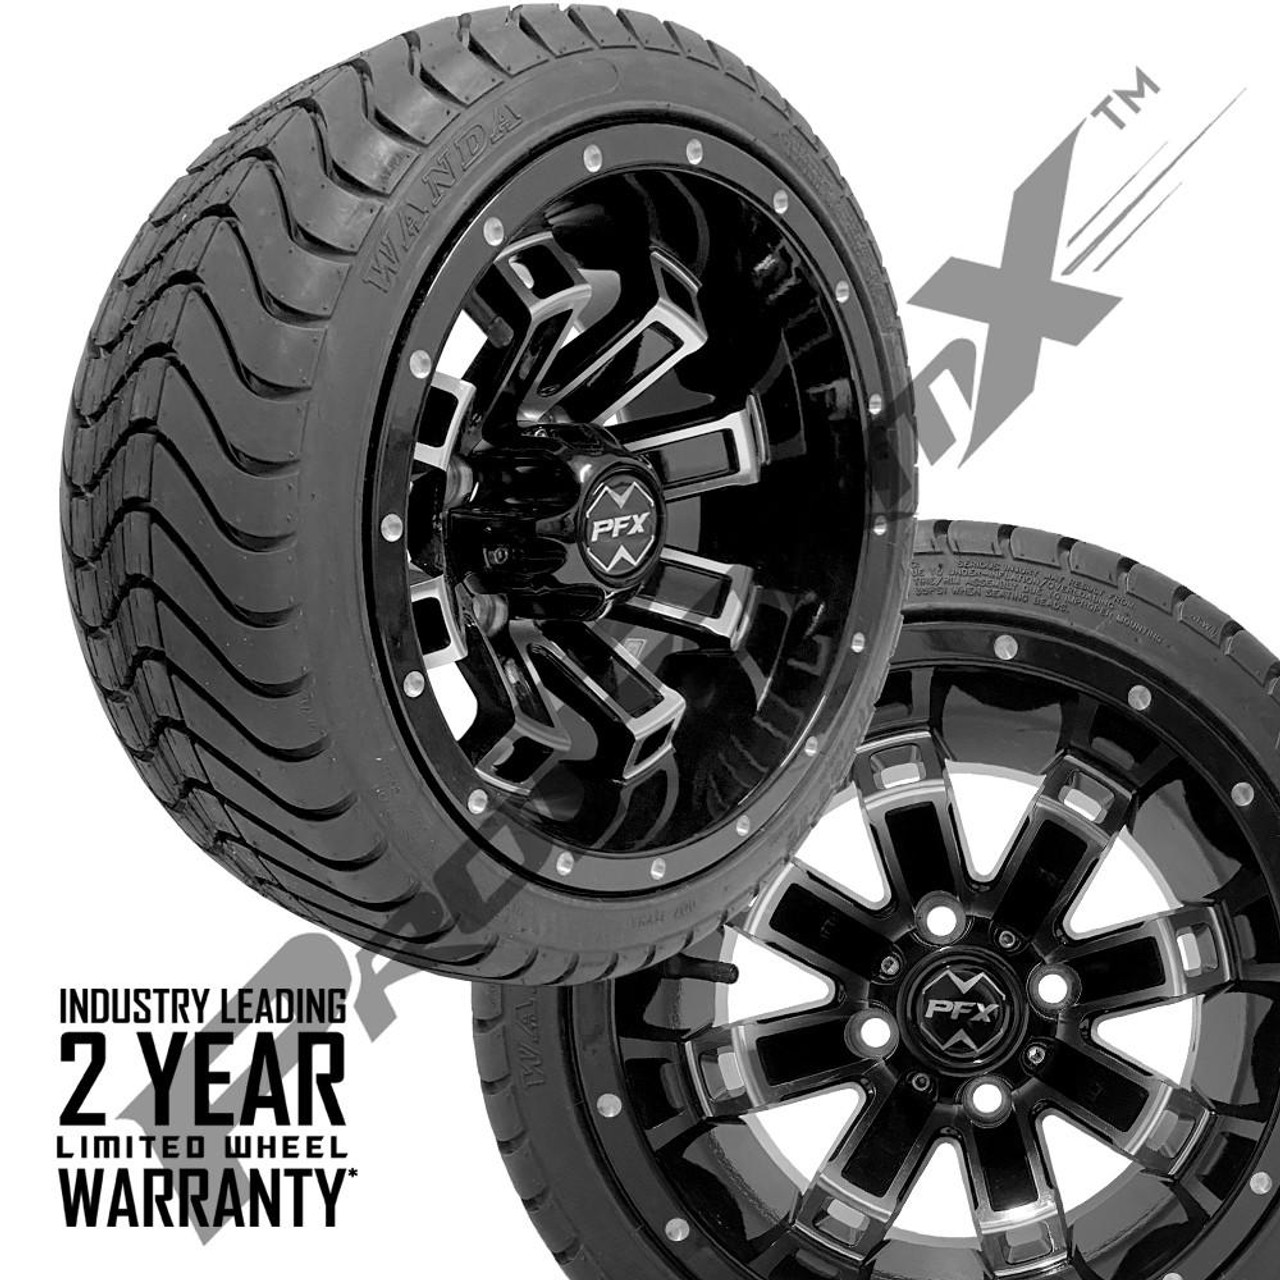 ProFormX 12" RECLUSE FX Machined/Black Wheels on 215/35-12 Venom Street Tires (Set of 4) 